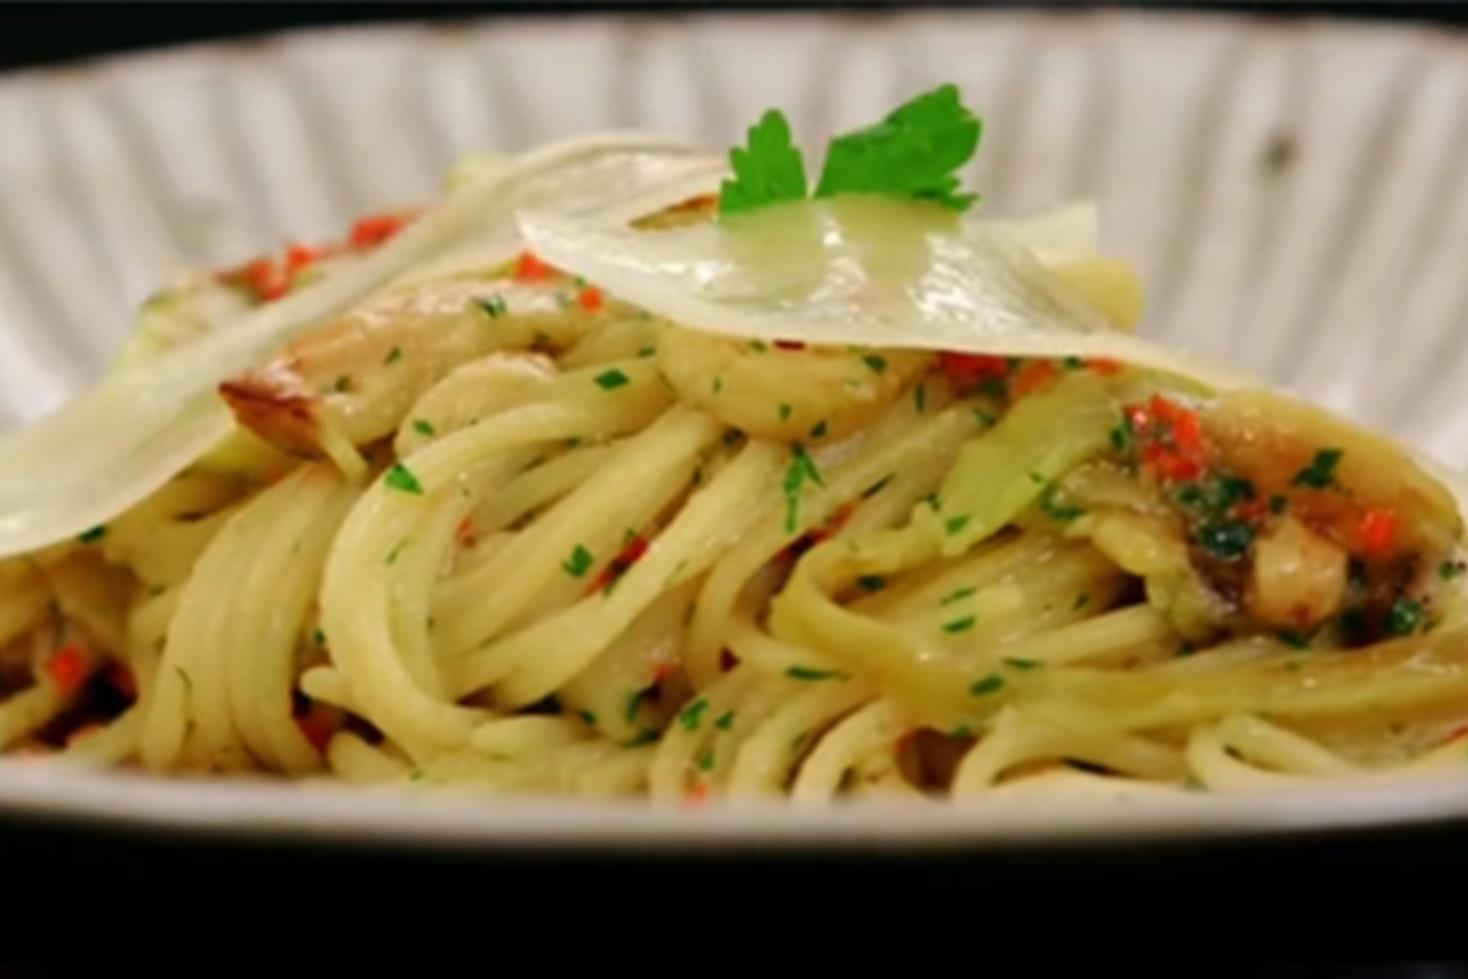 Spaghetele aglio olio cu peperoncino se servesc pe felii de vinete prăjite